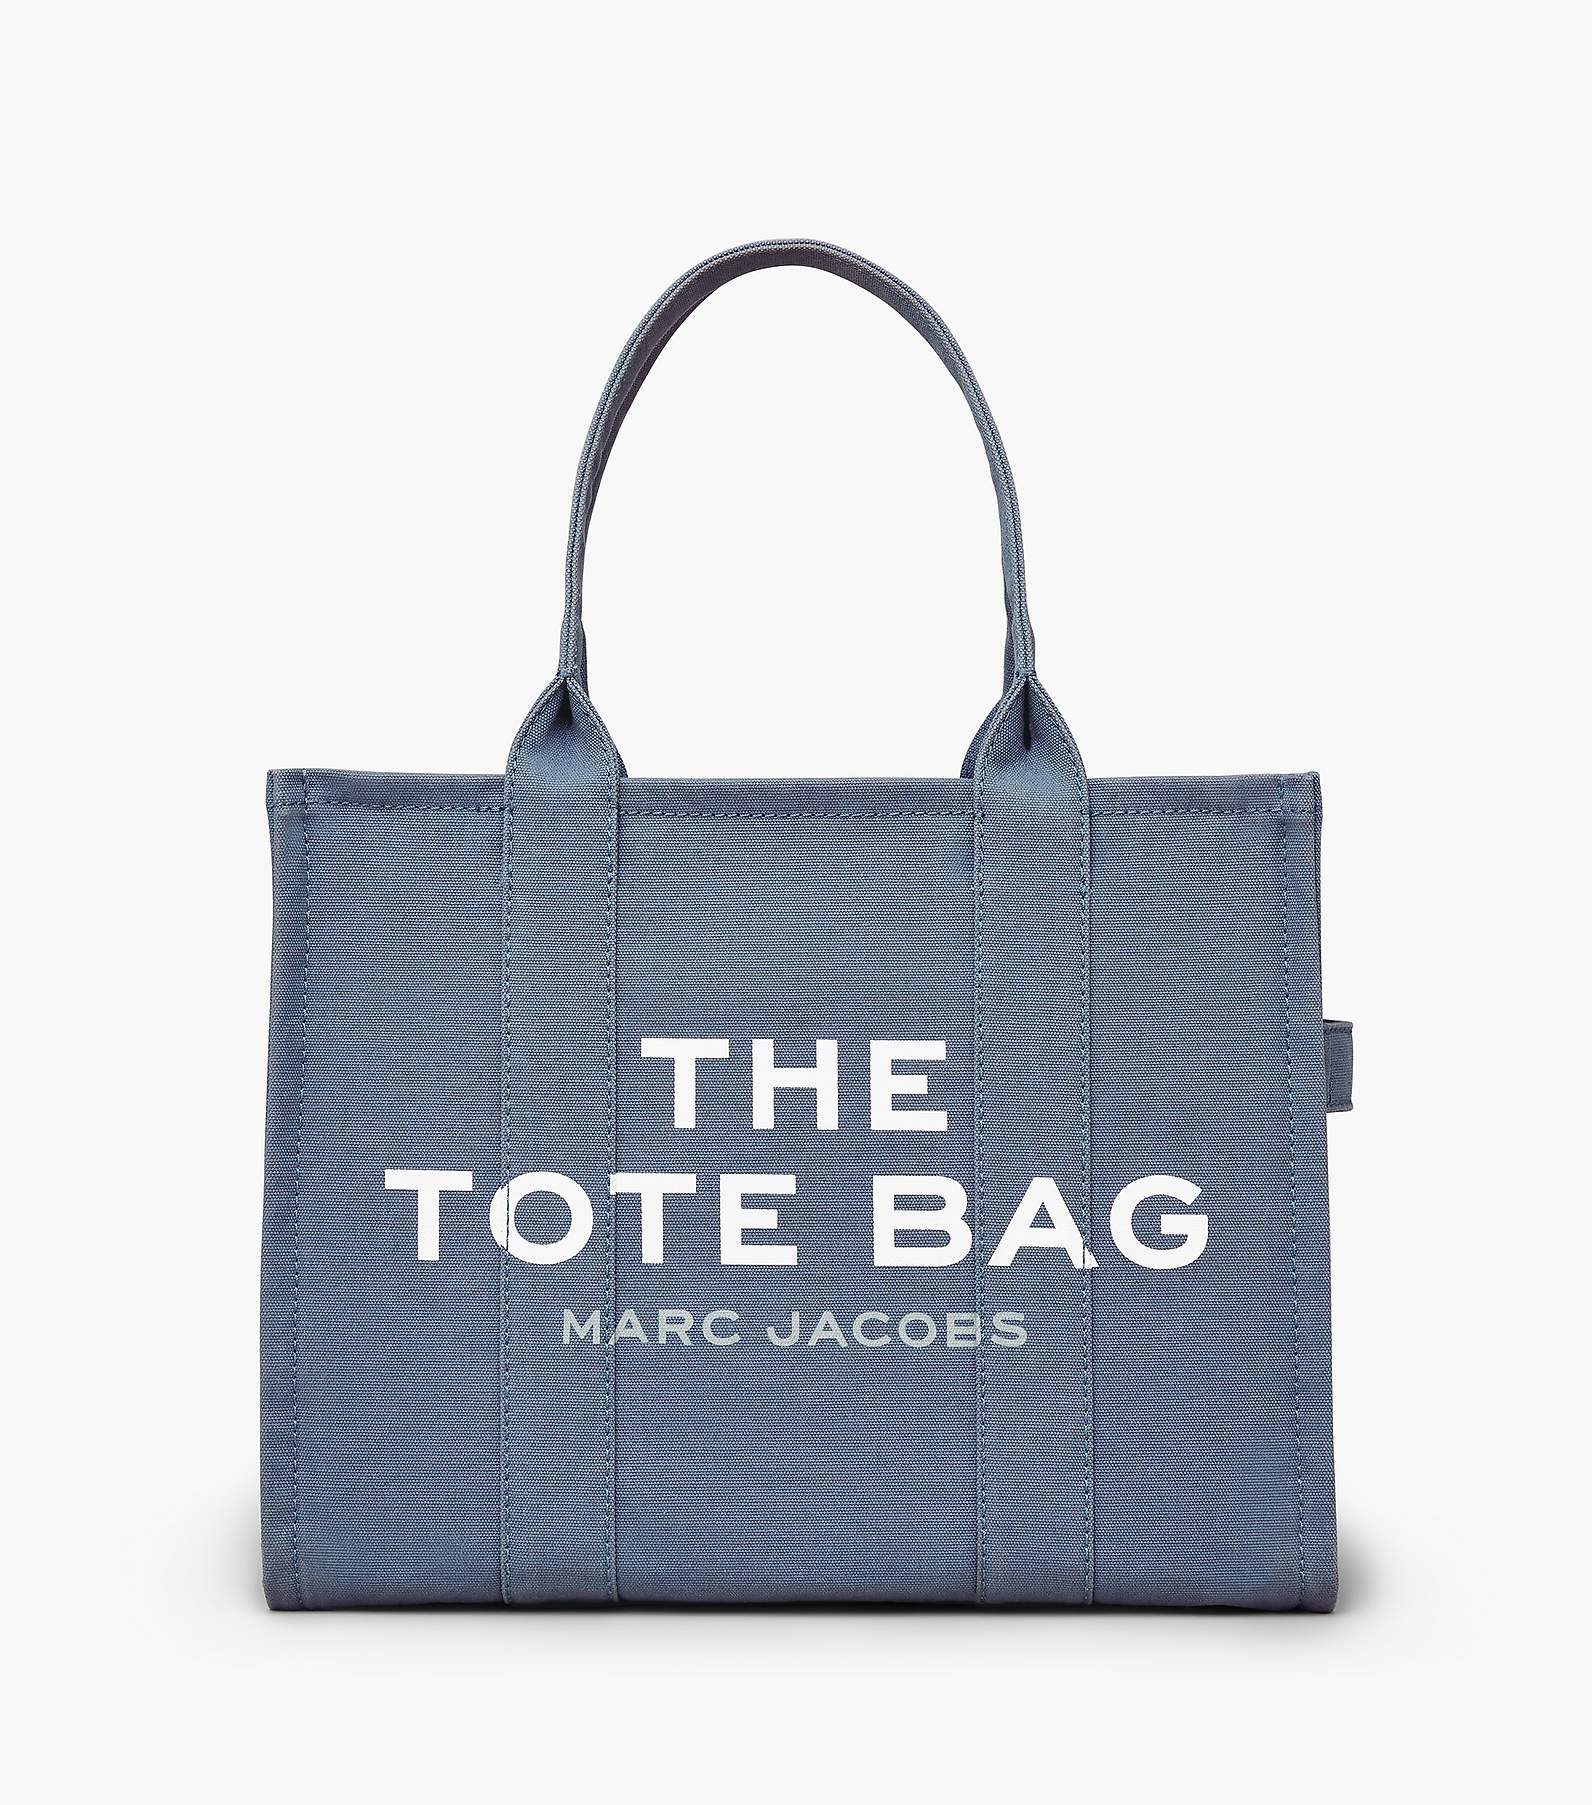 Marc Jacobs The Nano Tote Bag Charm